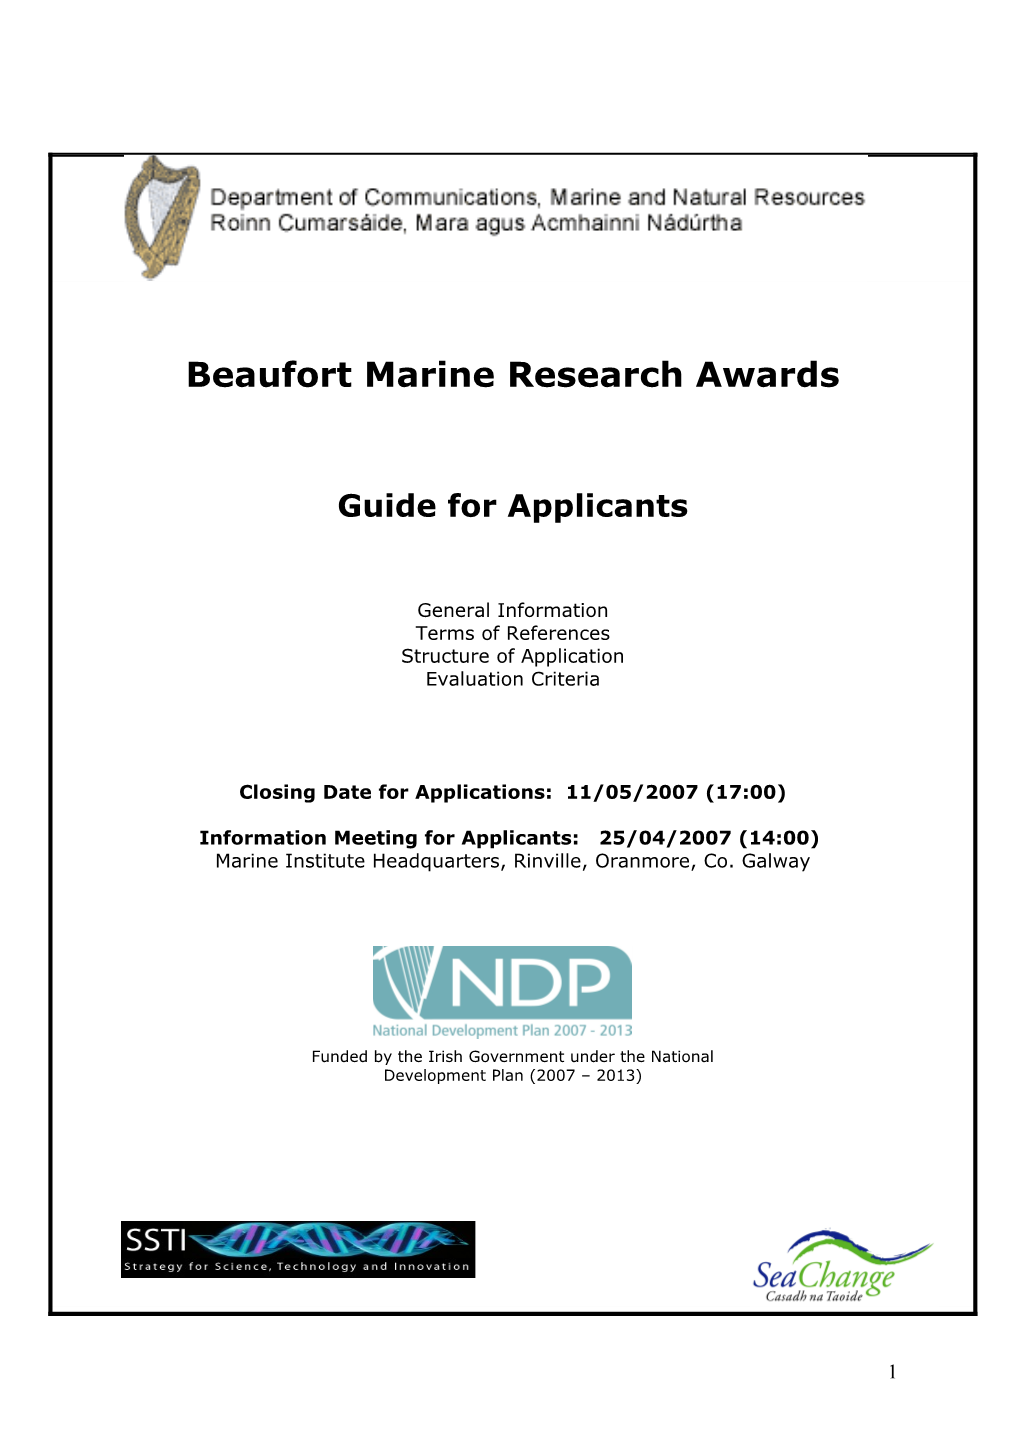 Beaufort Marine Research Awards